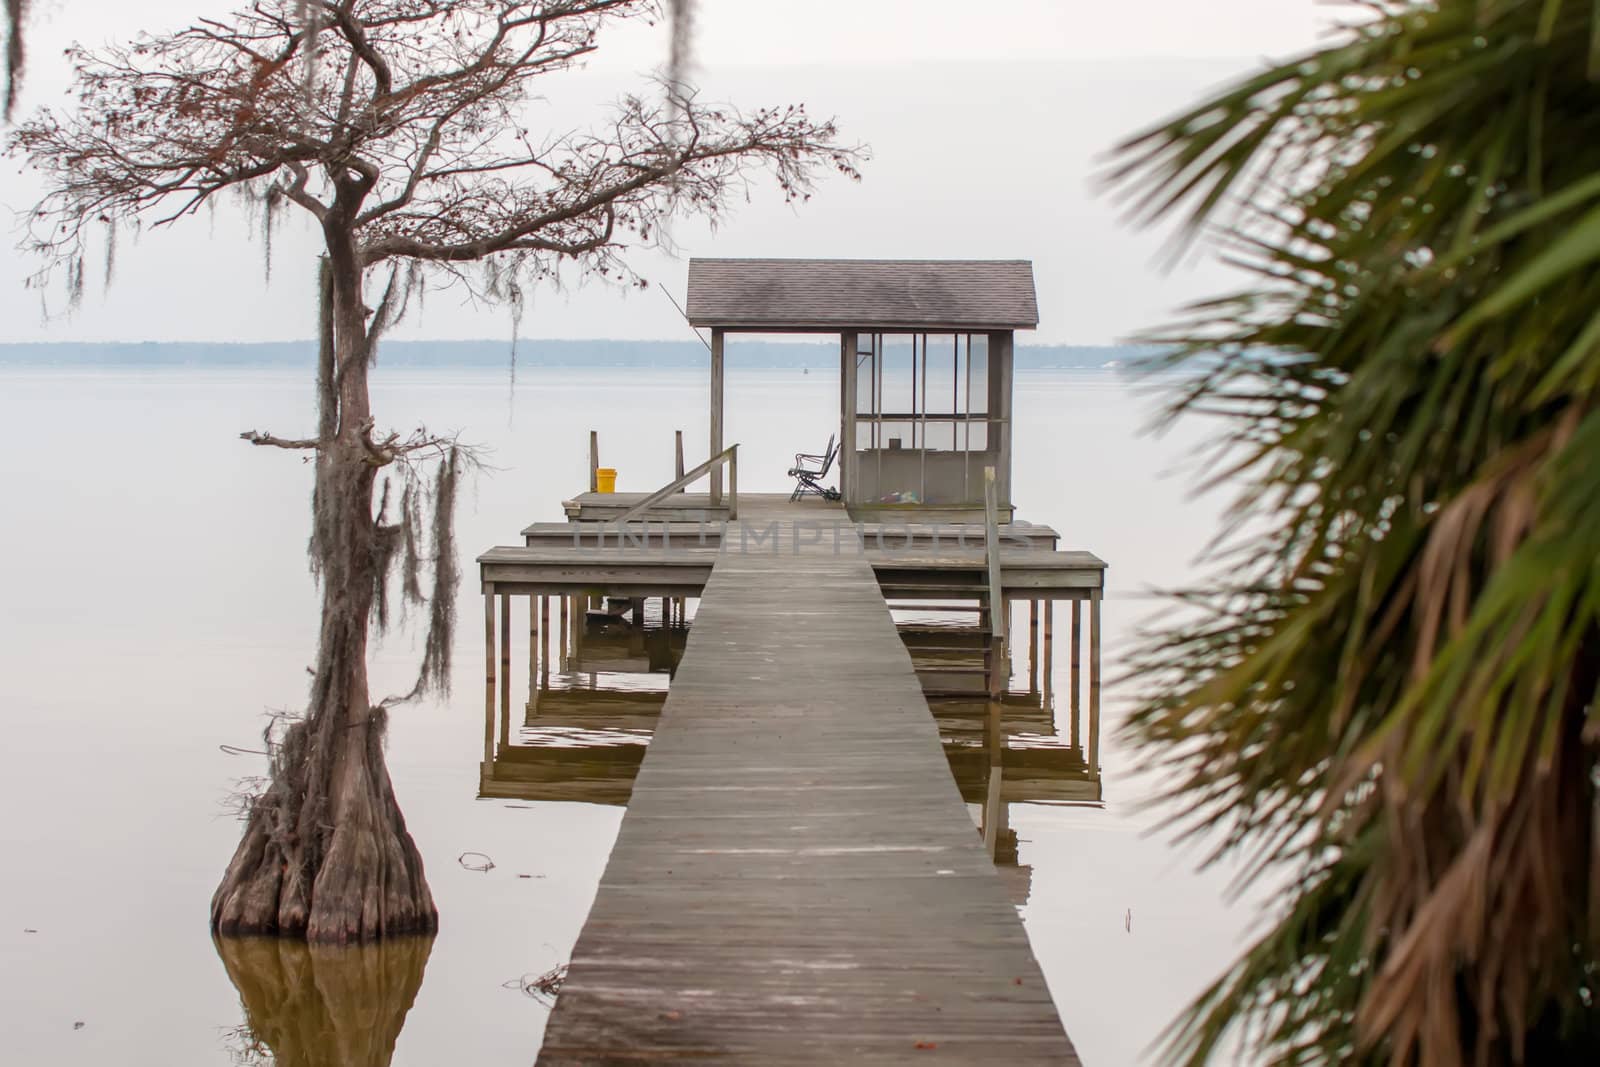 gazebo pier on a lake with chairs